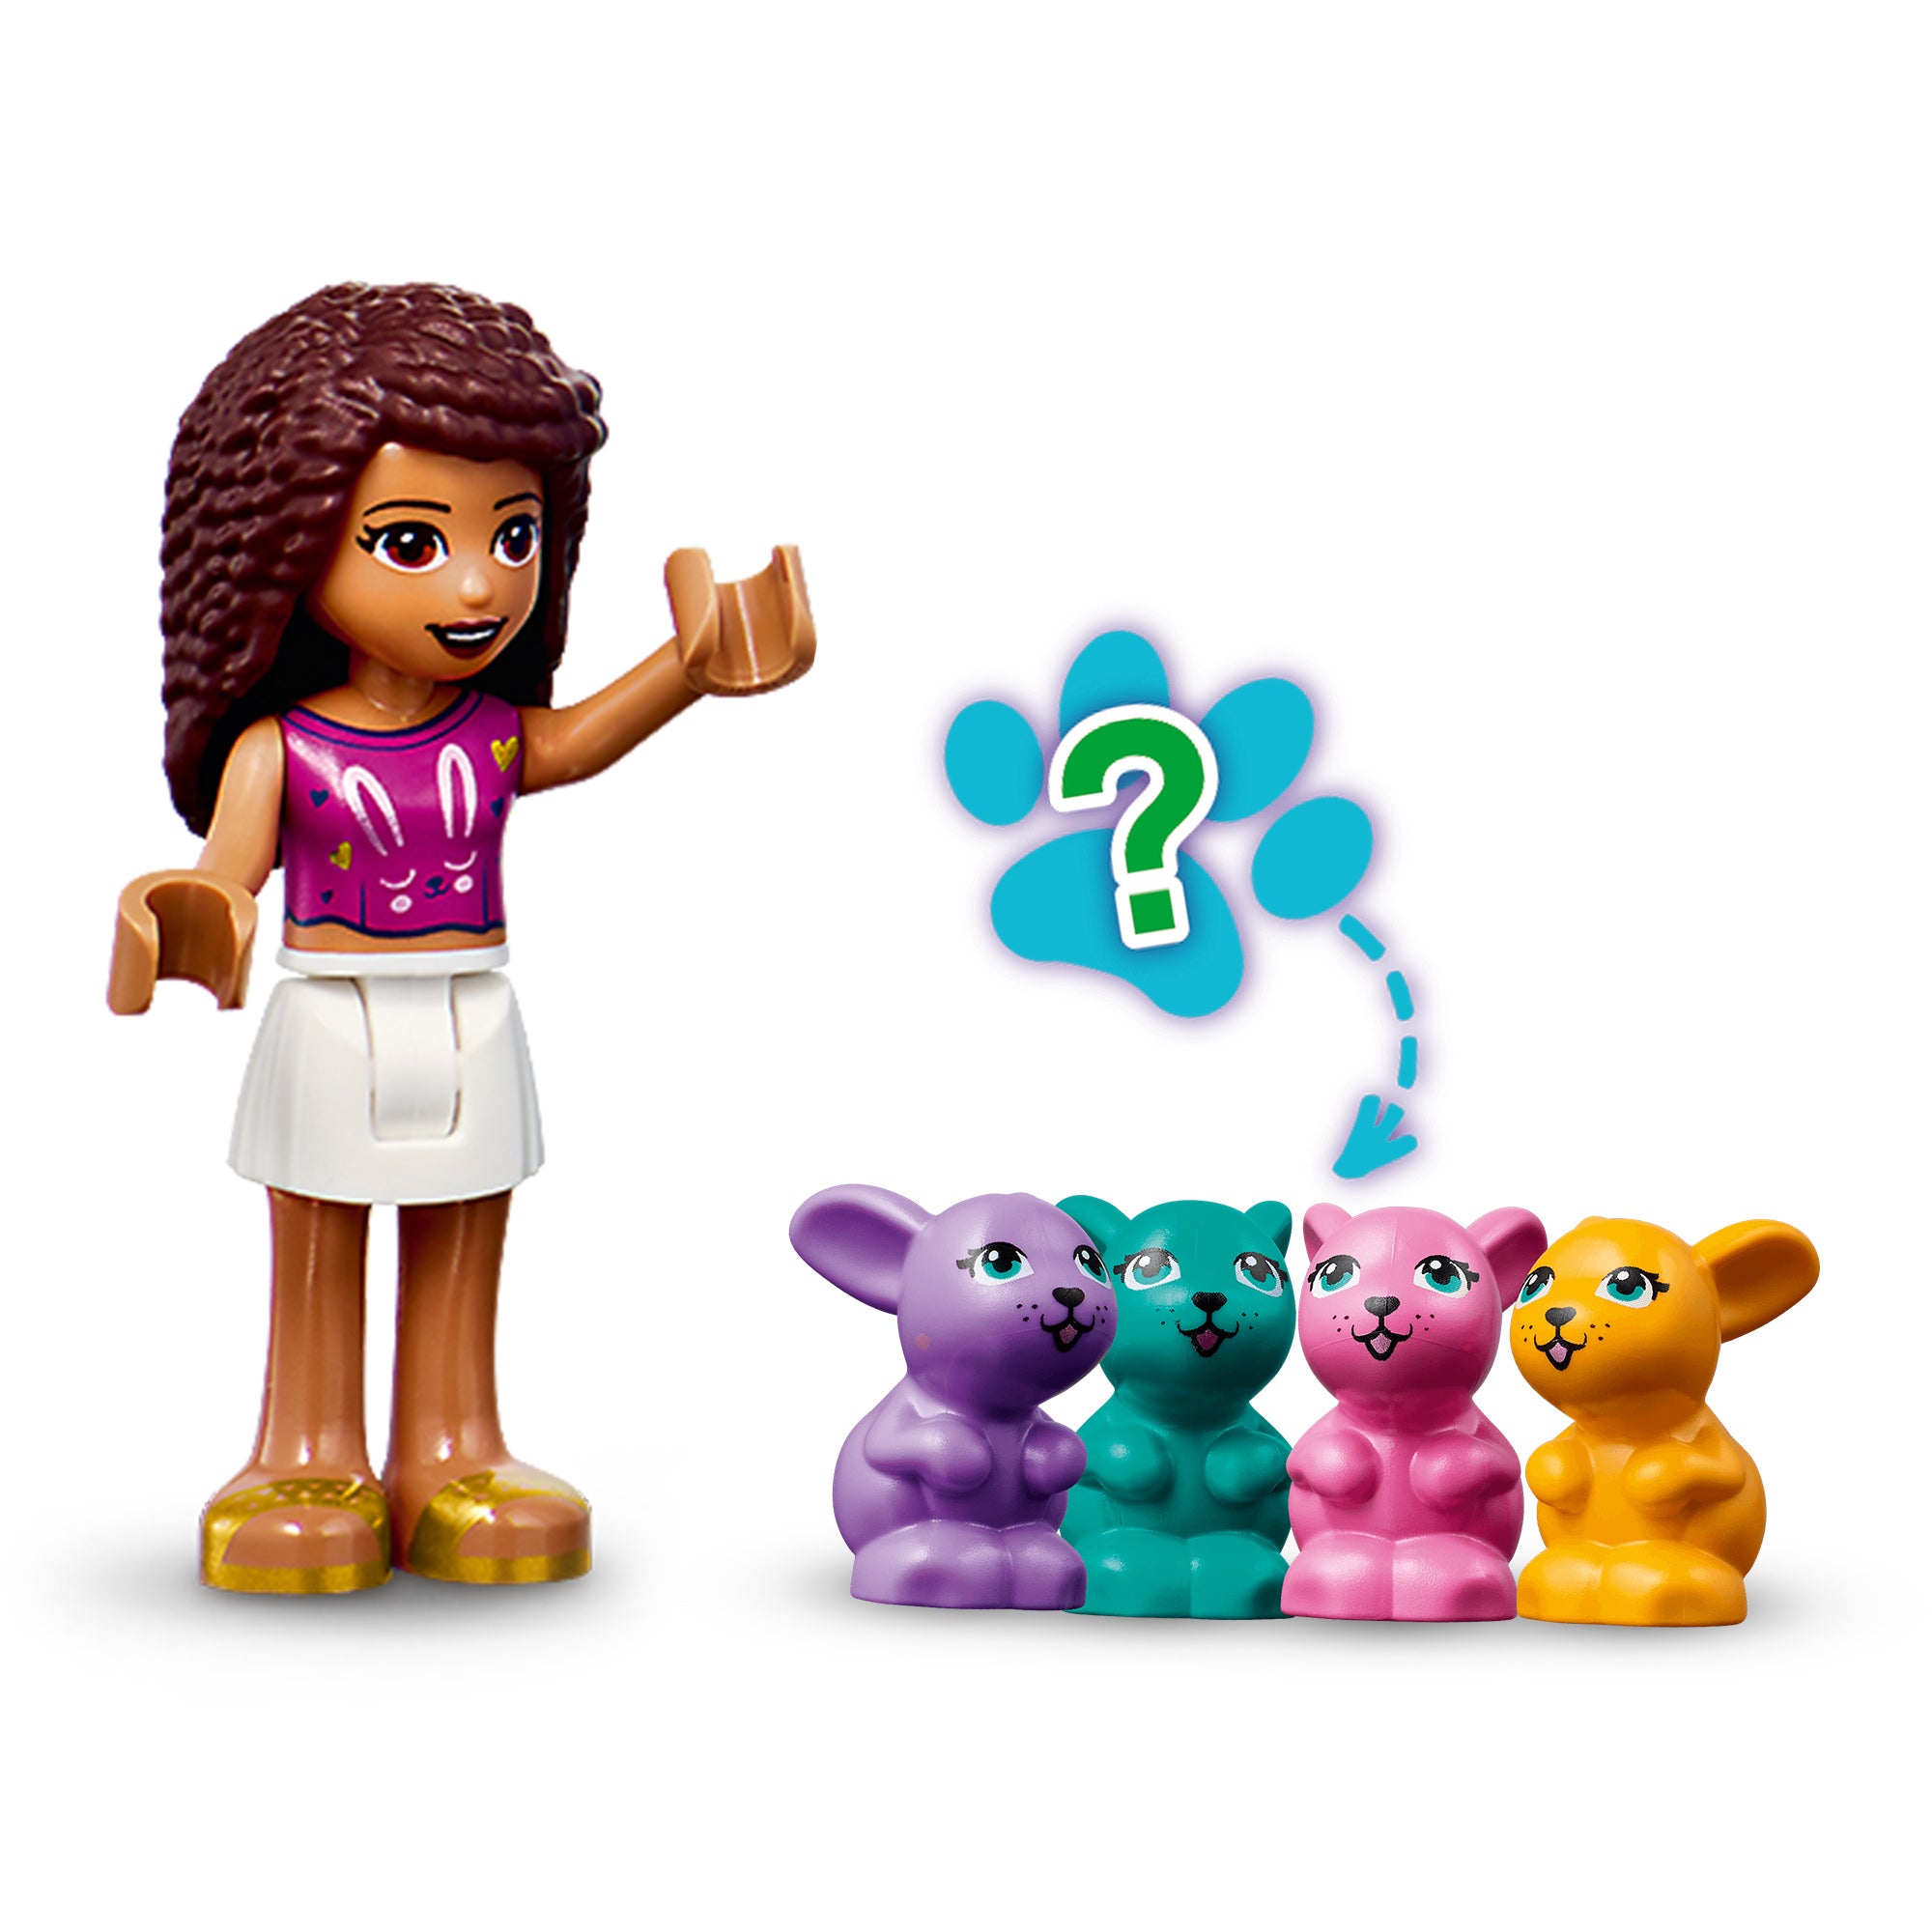 LEGO® Friends Andrea’s Bunny Cube Playset 41666 Default Title